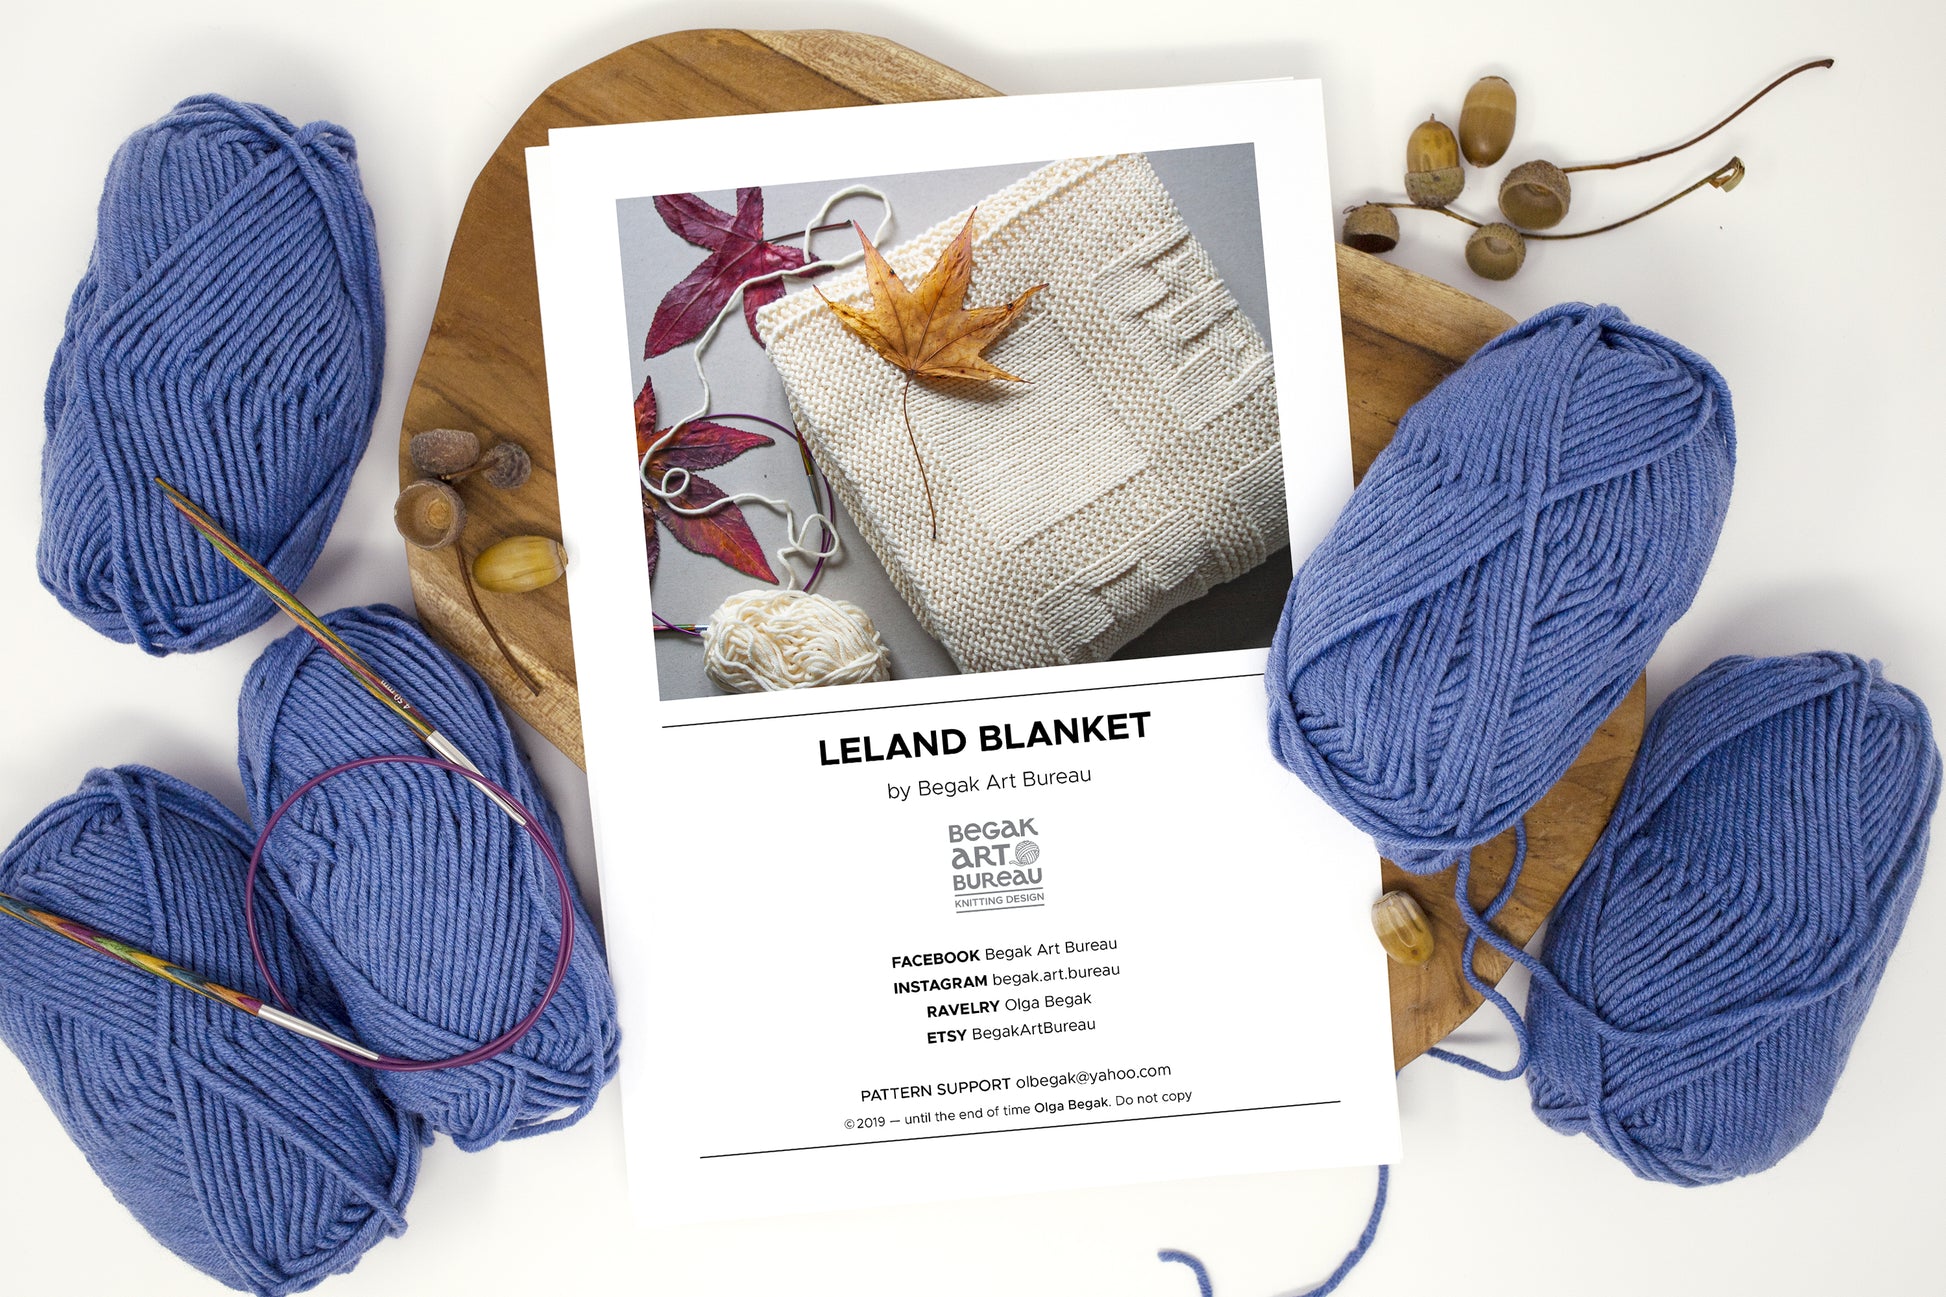 Geometrical blanket knitting pattern with blue yarn balls